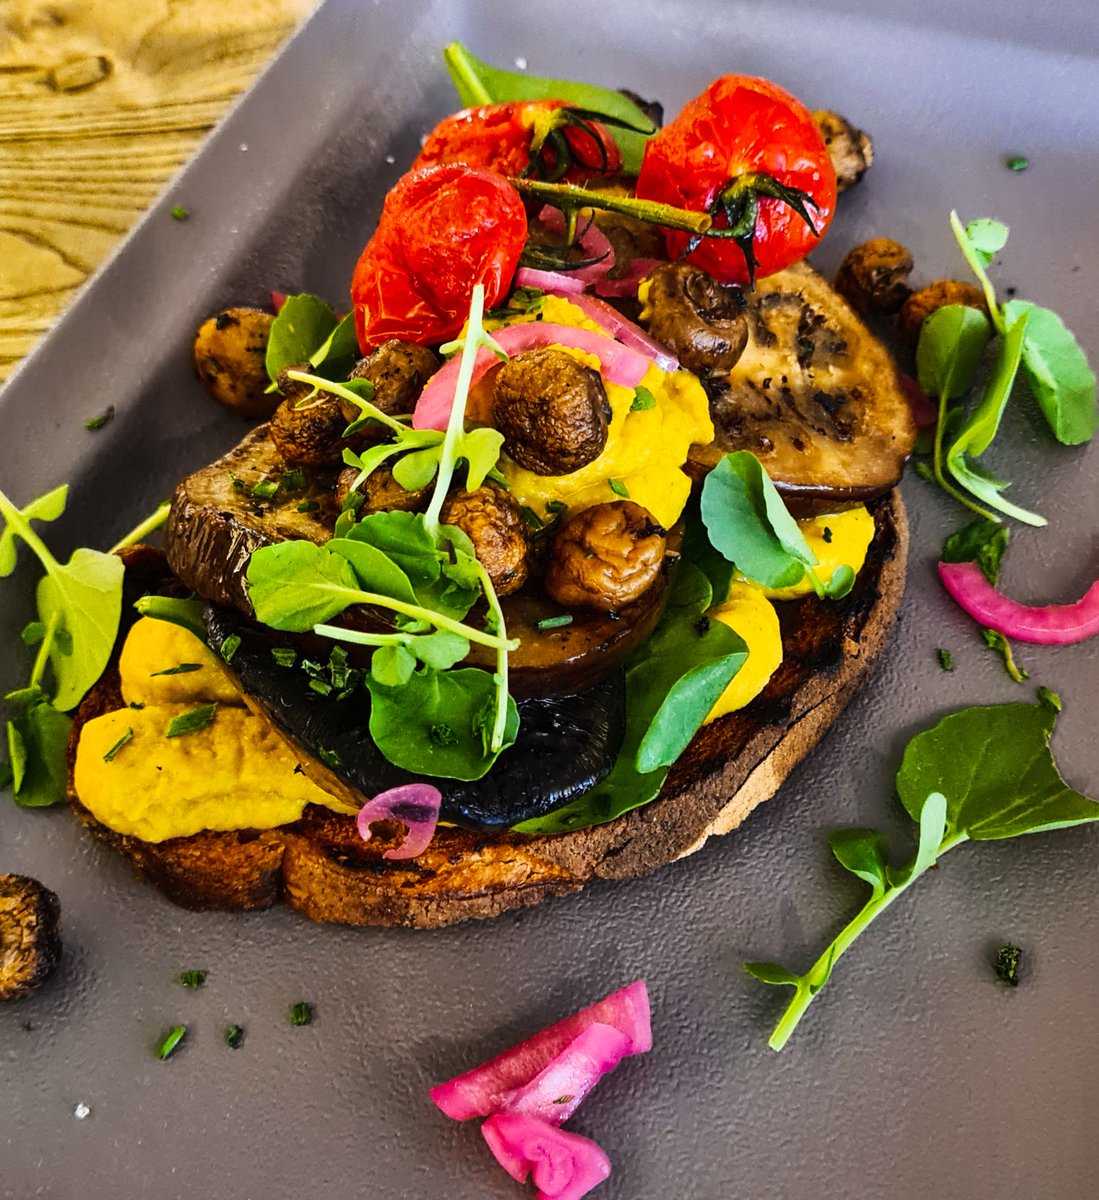 #veganlunch wild mushrooms, sweet potato, roasted chickpeas on sourdough toast #veganfood @Arnieg800 @JamieRohu @Veganella_ @agargmd @vegannutrition1 @wildatlanticway